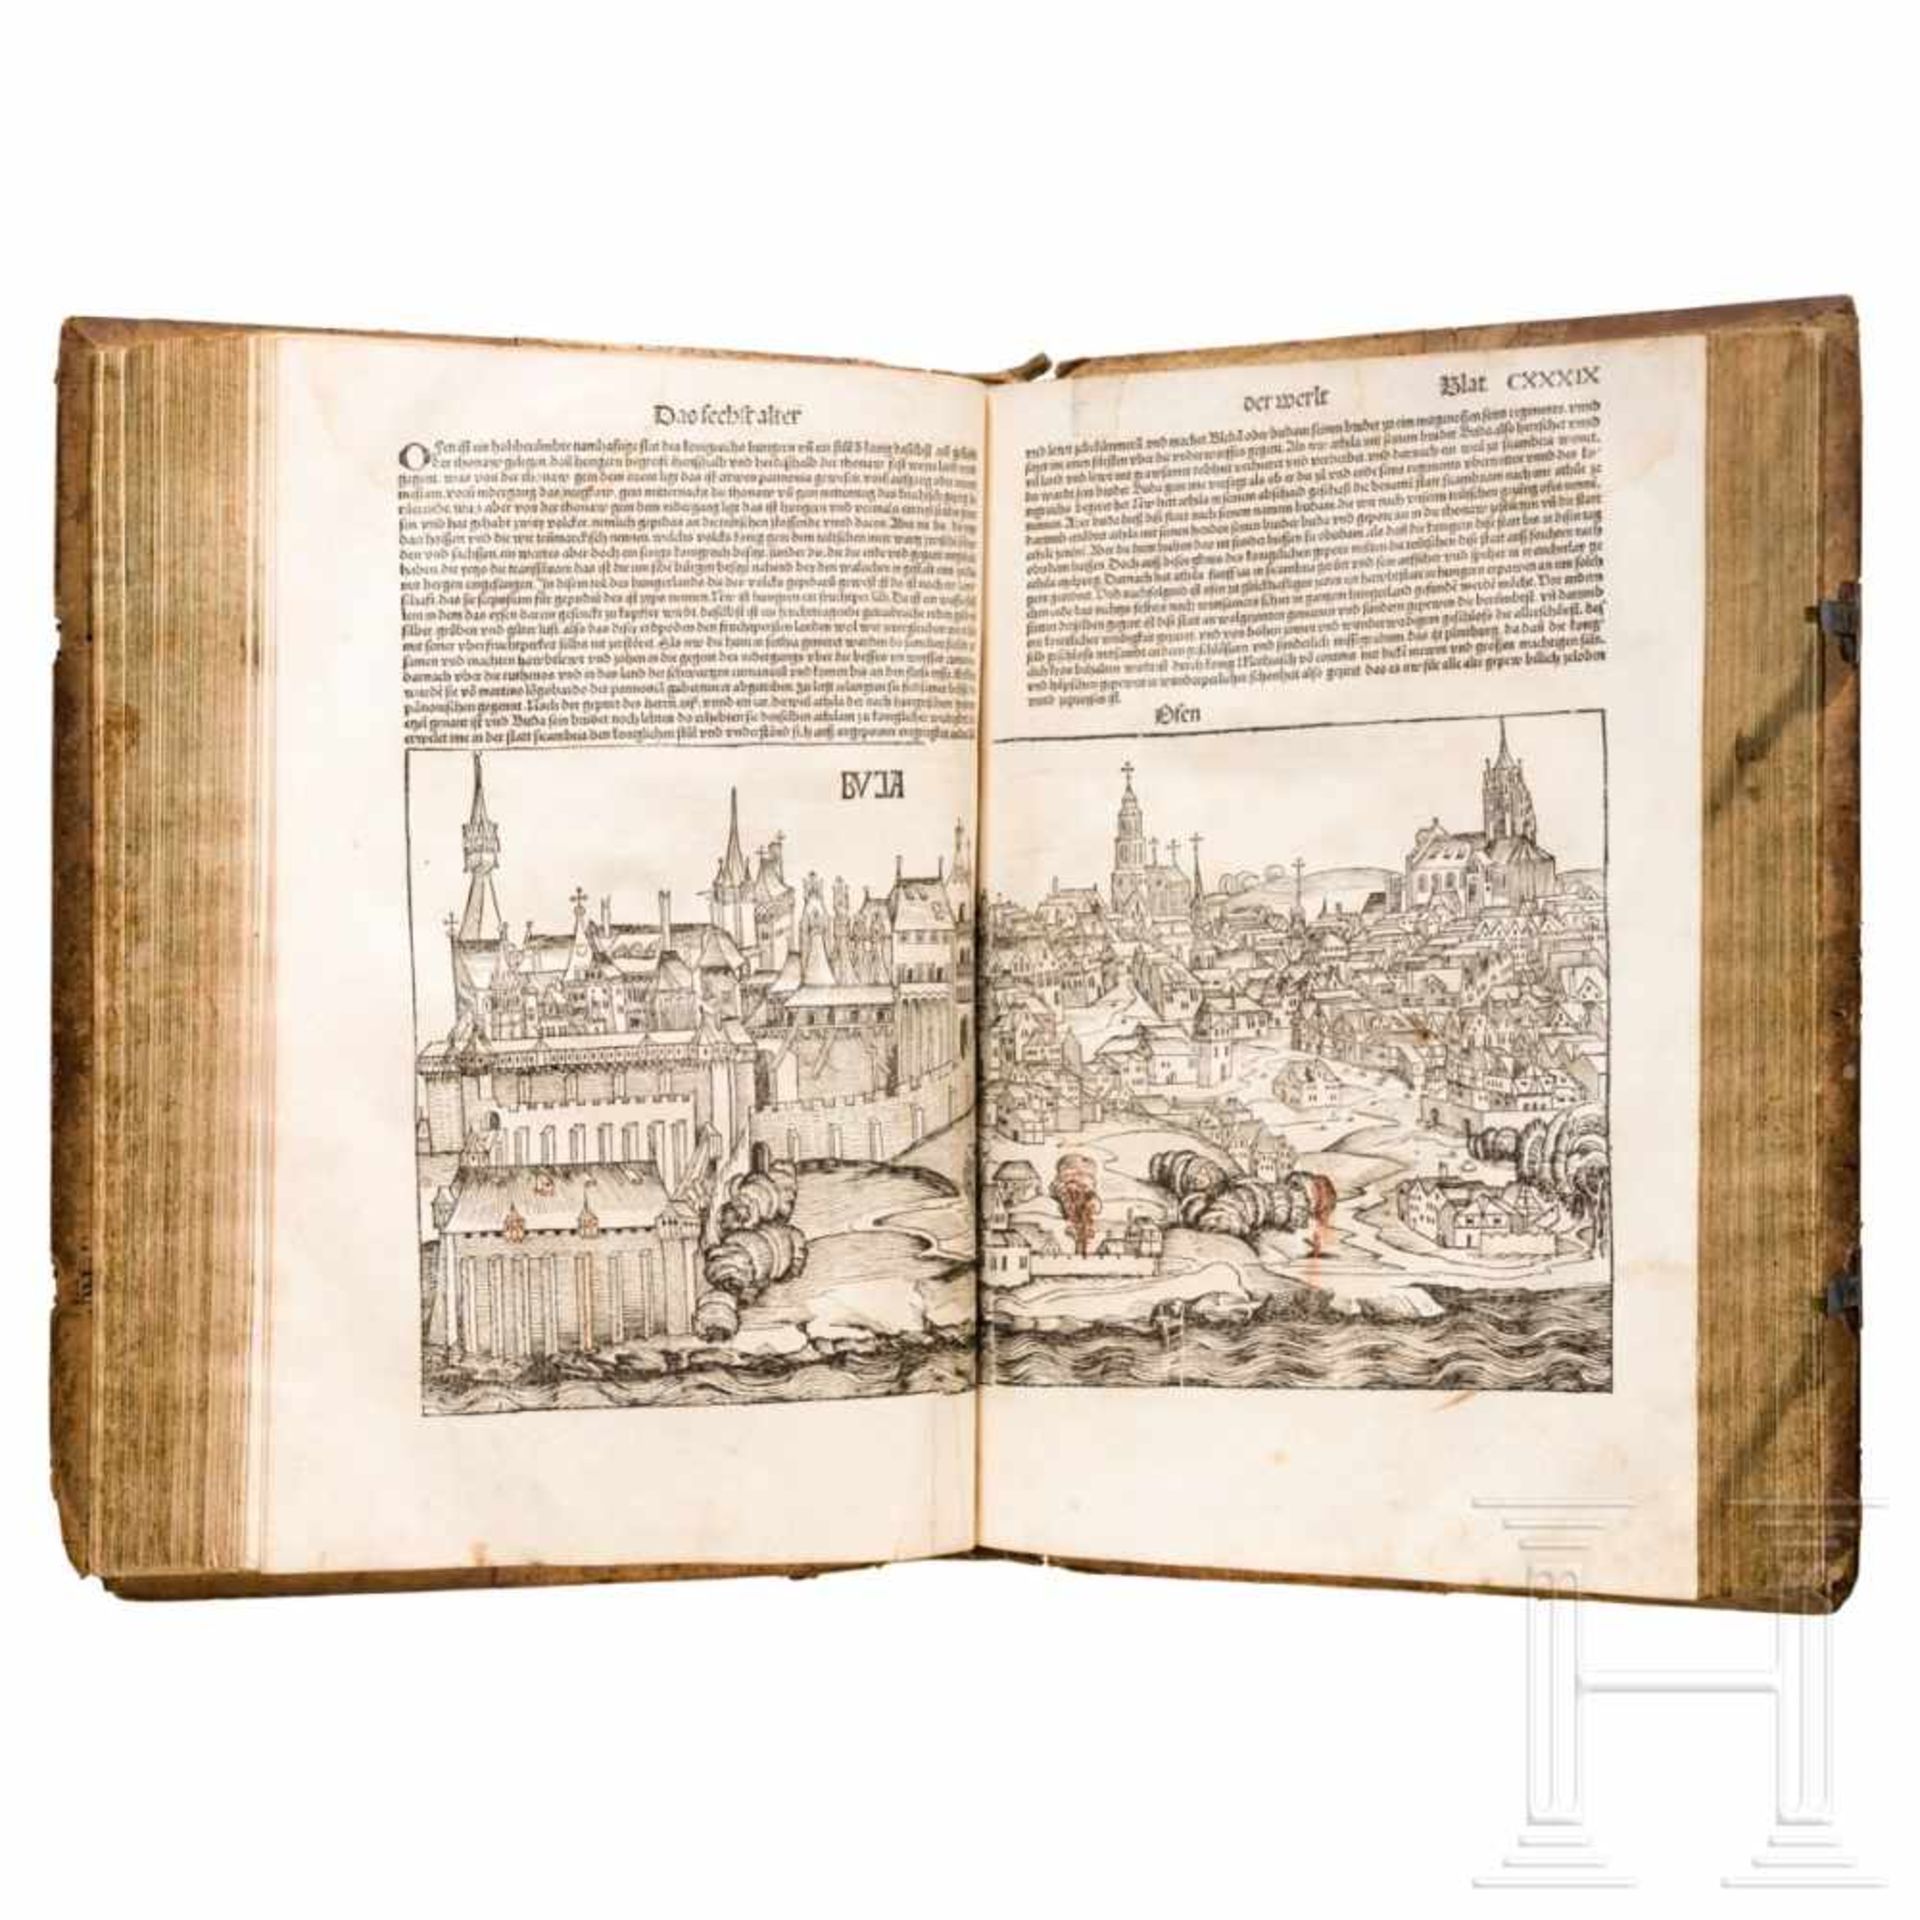 Hartmann Schedel, Das Buch der Chroniken, Nürnberg, A. Koberger, 1493 - Bild 25 aus 51